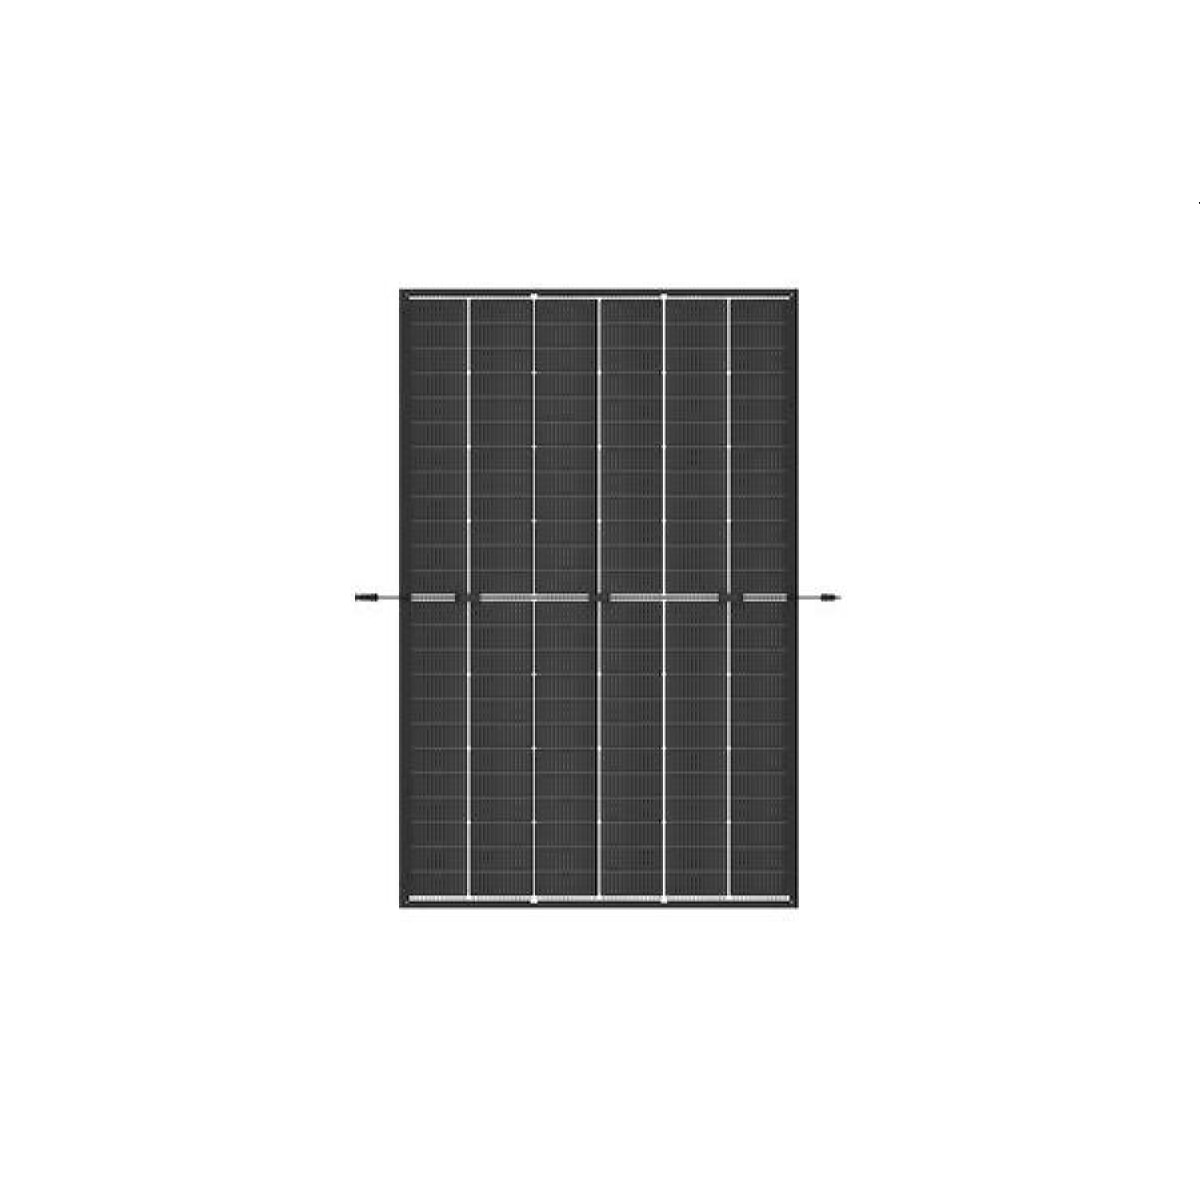 Trina Solar solar module Vertex S+ TSM-430NEG9RC.27 glass-glass bifacial black frame